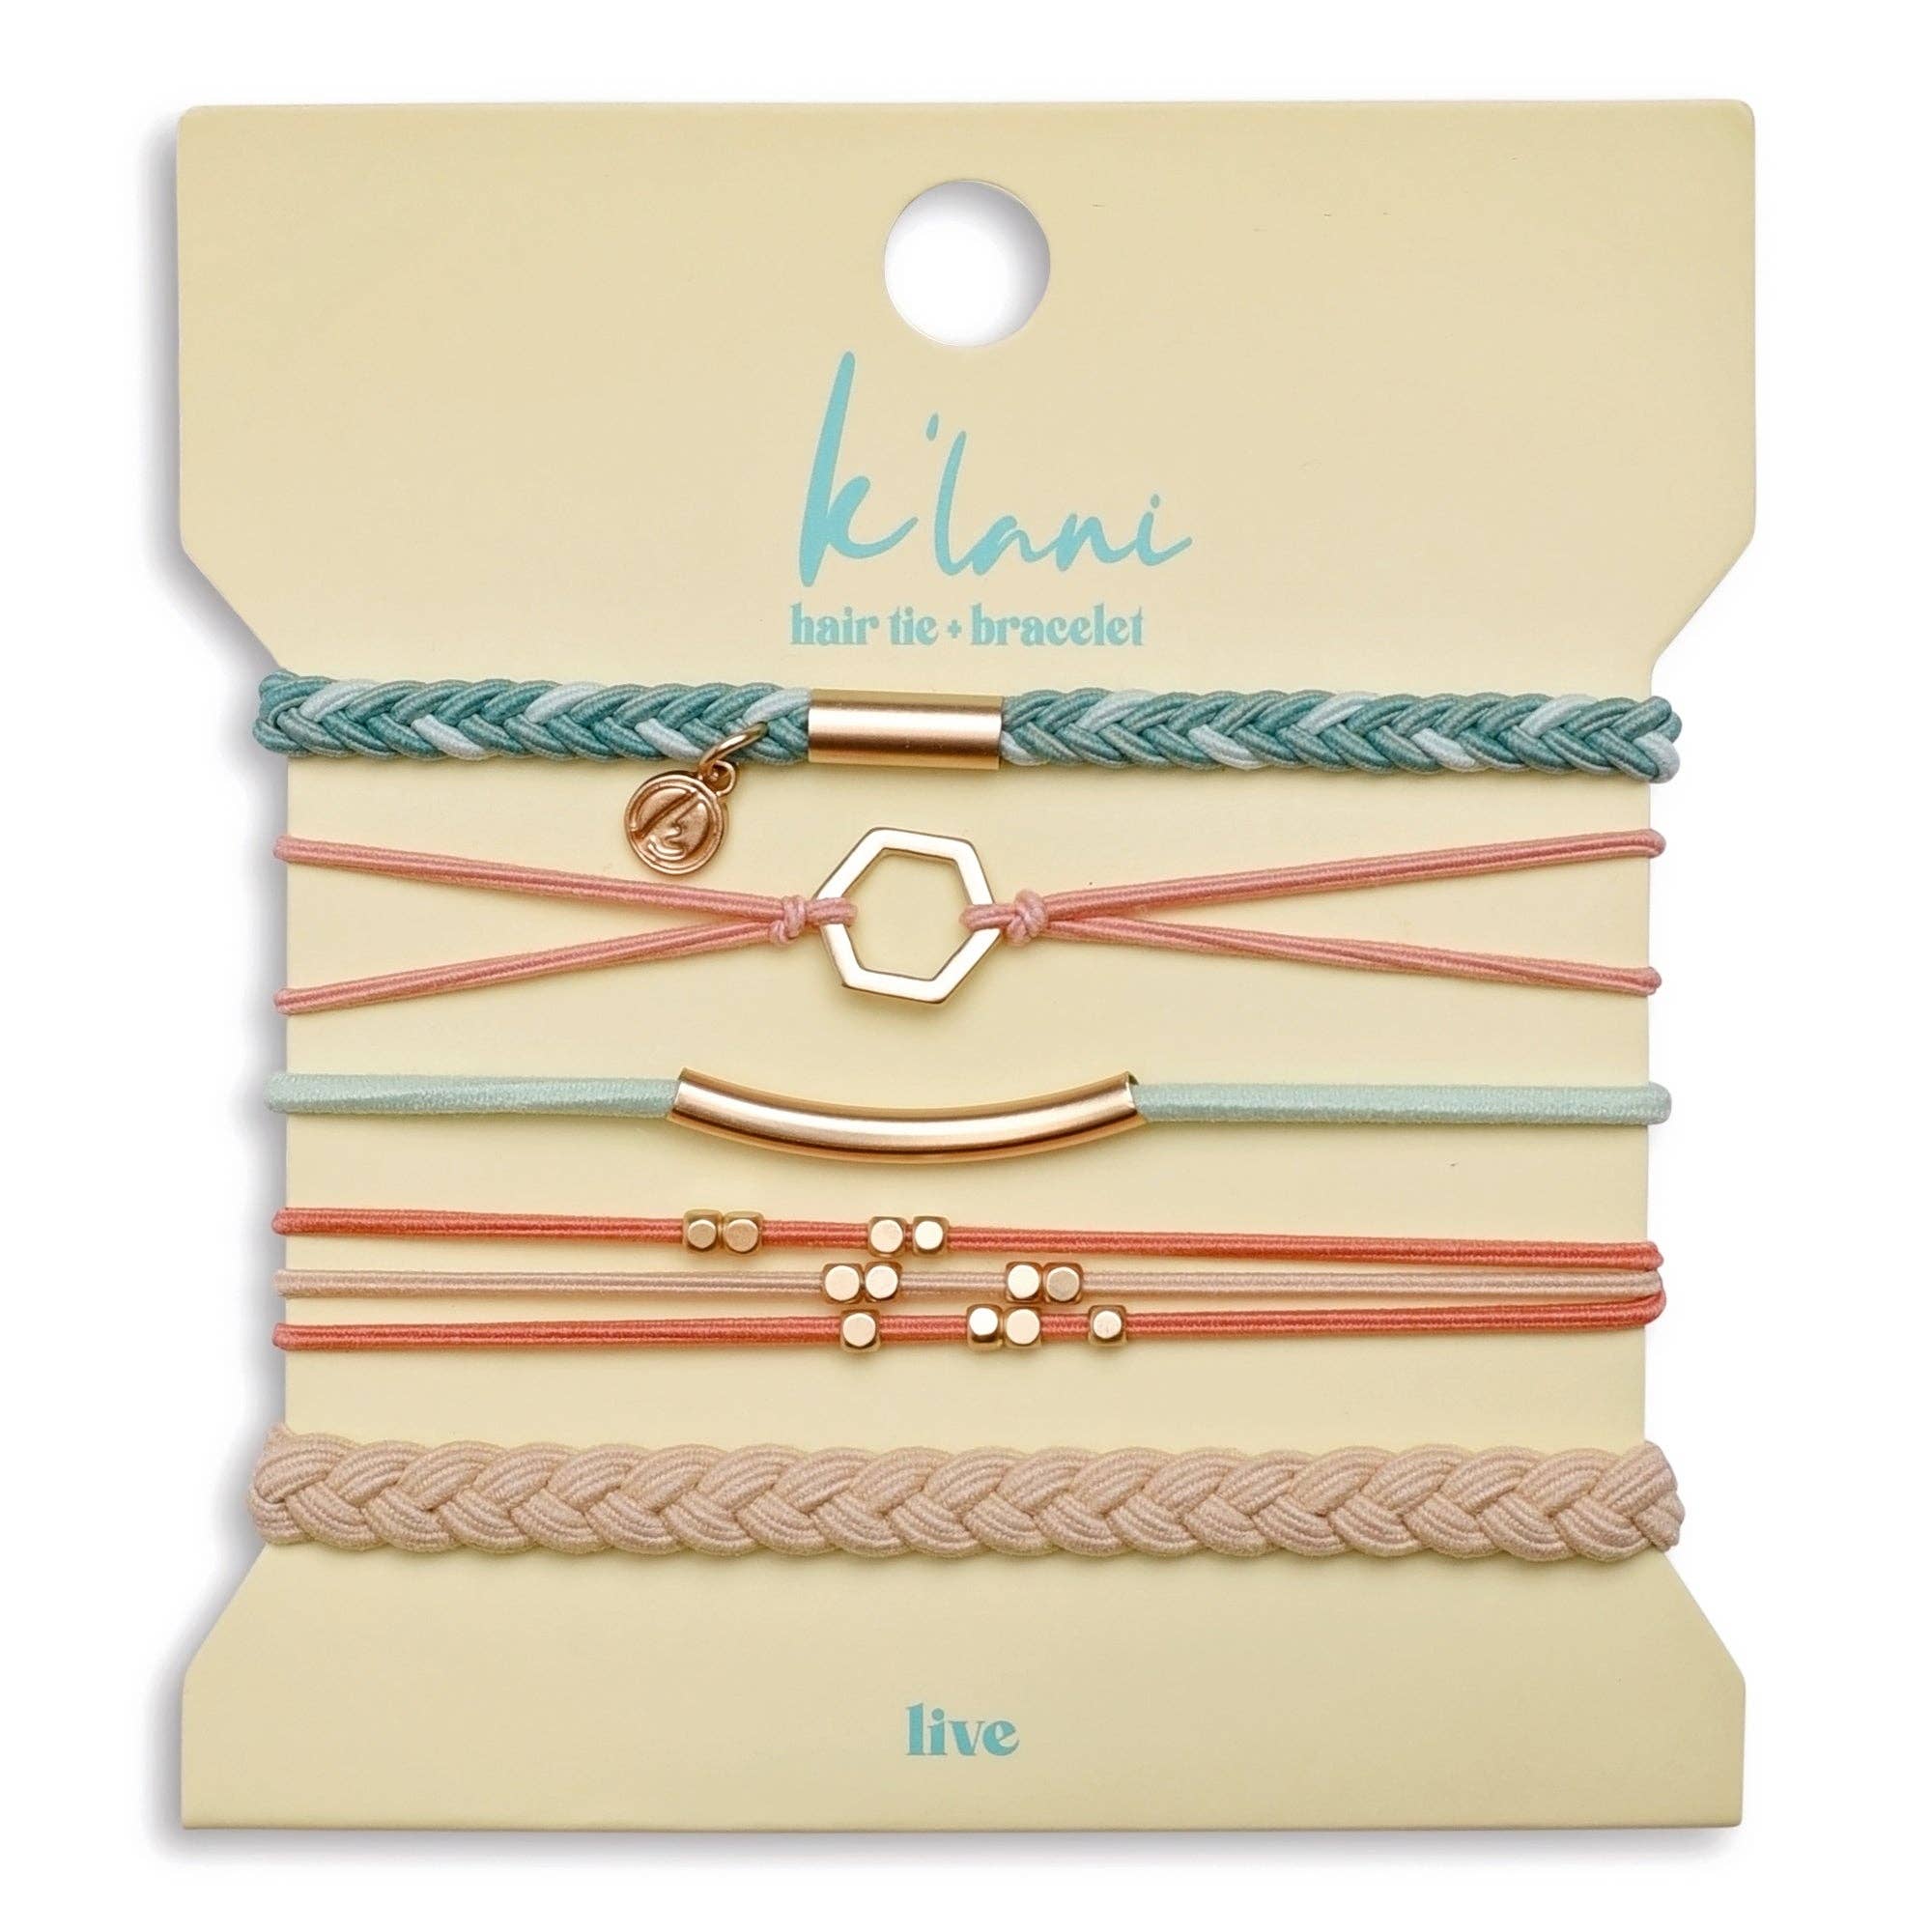 K'Lani hair tie bracelets - Live